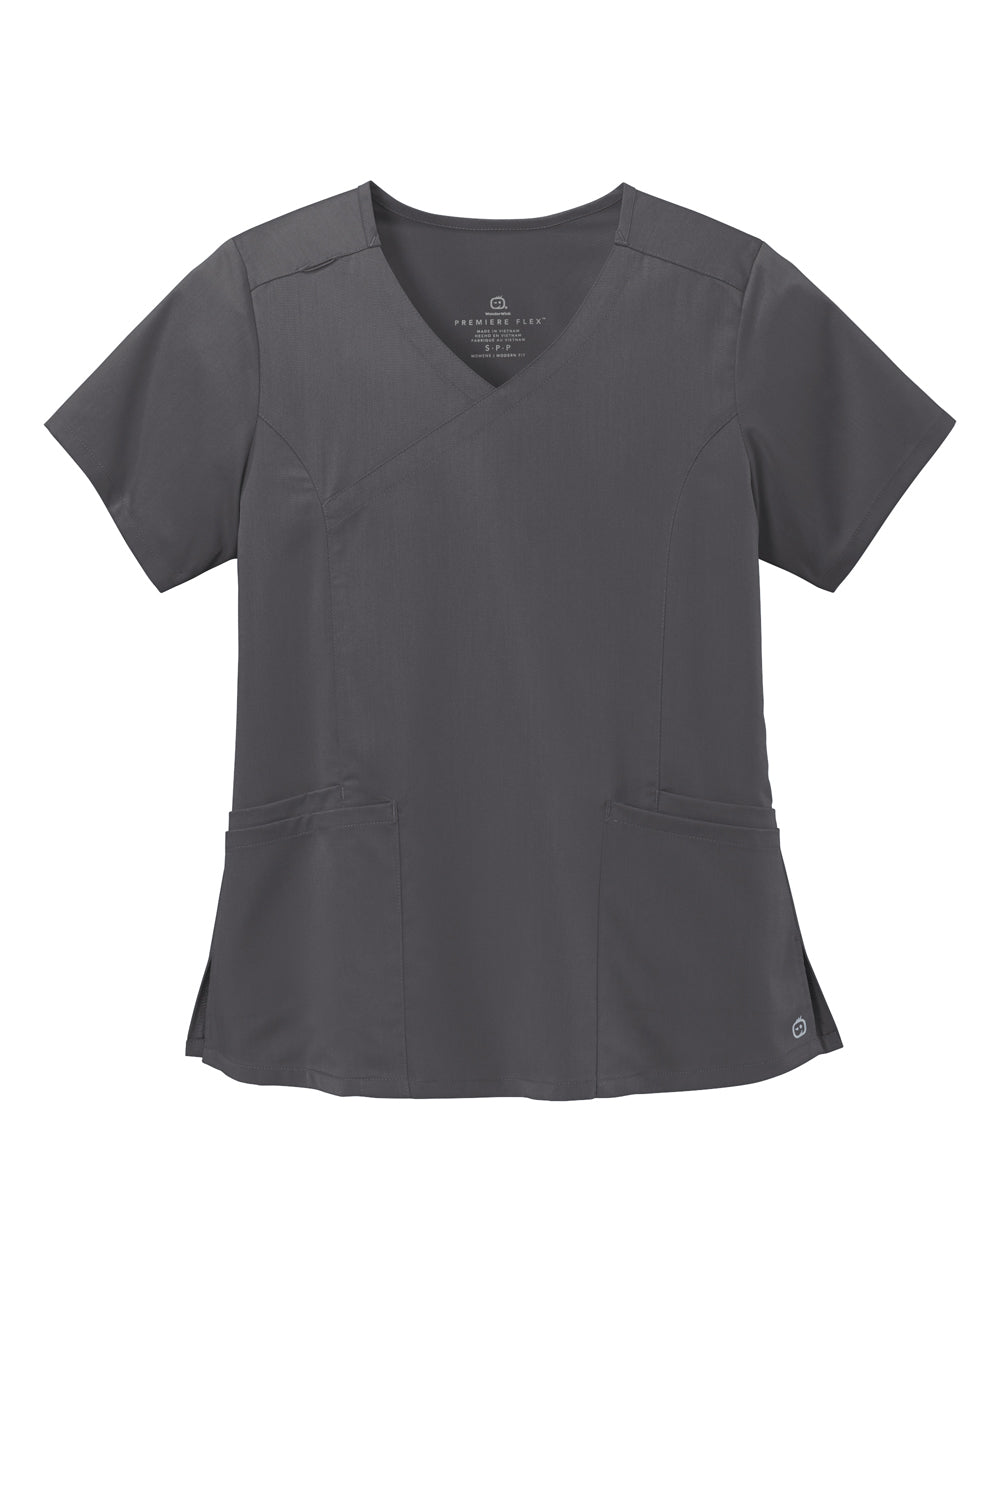 Wonderwink WW4268 Premiere Flex Short Sleeve V-Neck Mock Wrap Shirt Pewter Grey Flat Front